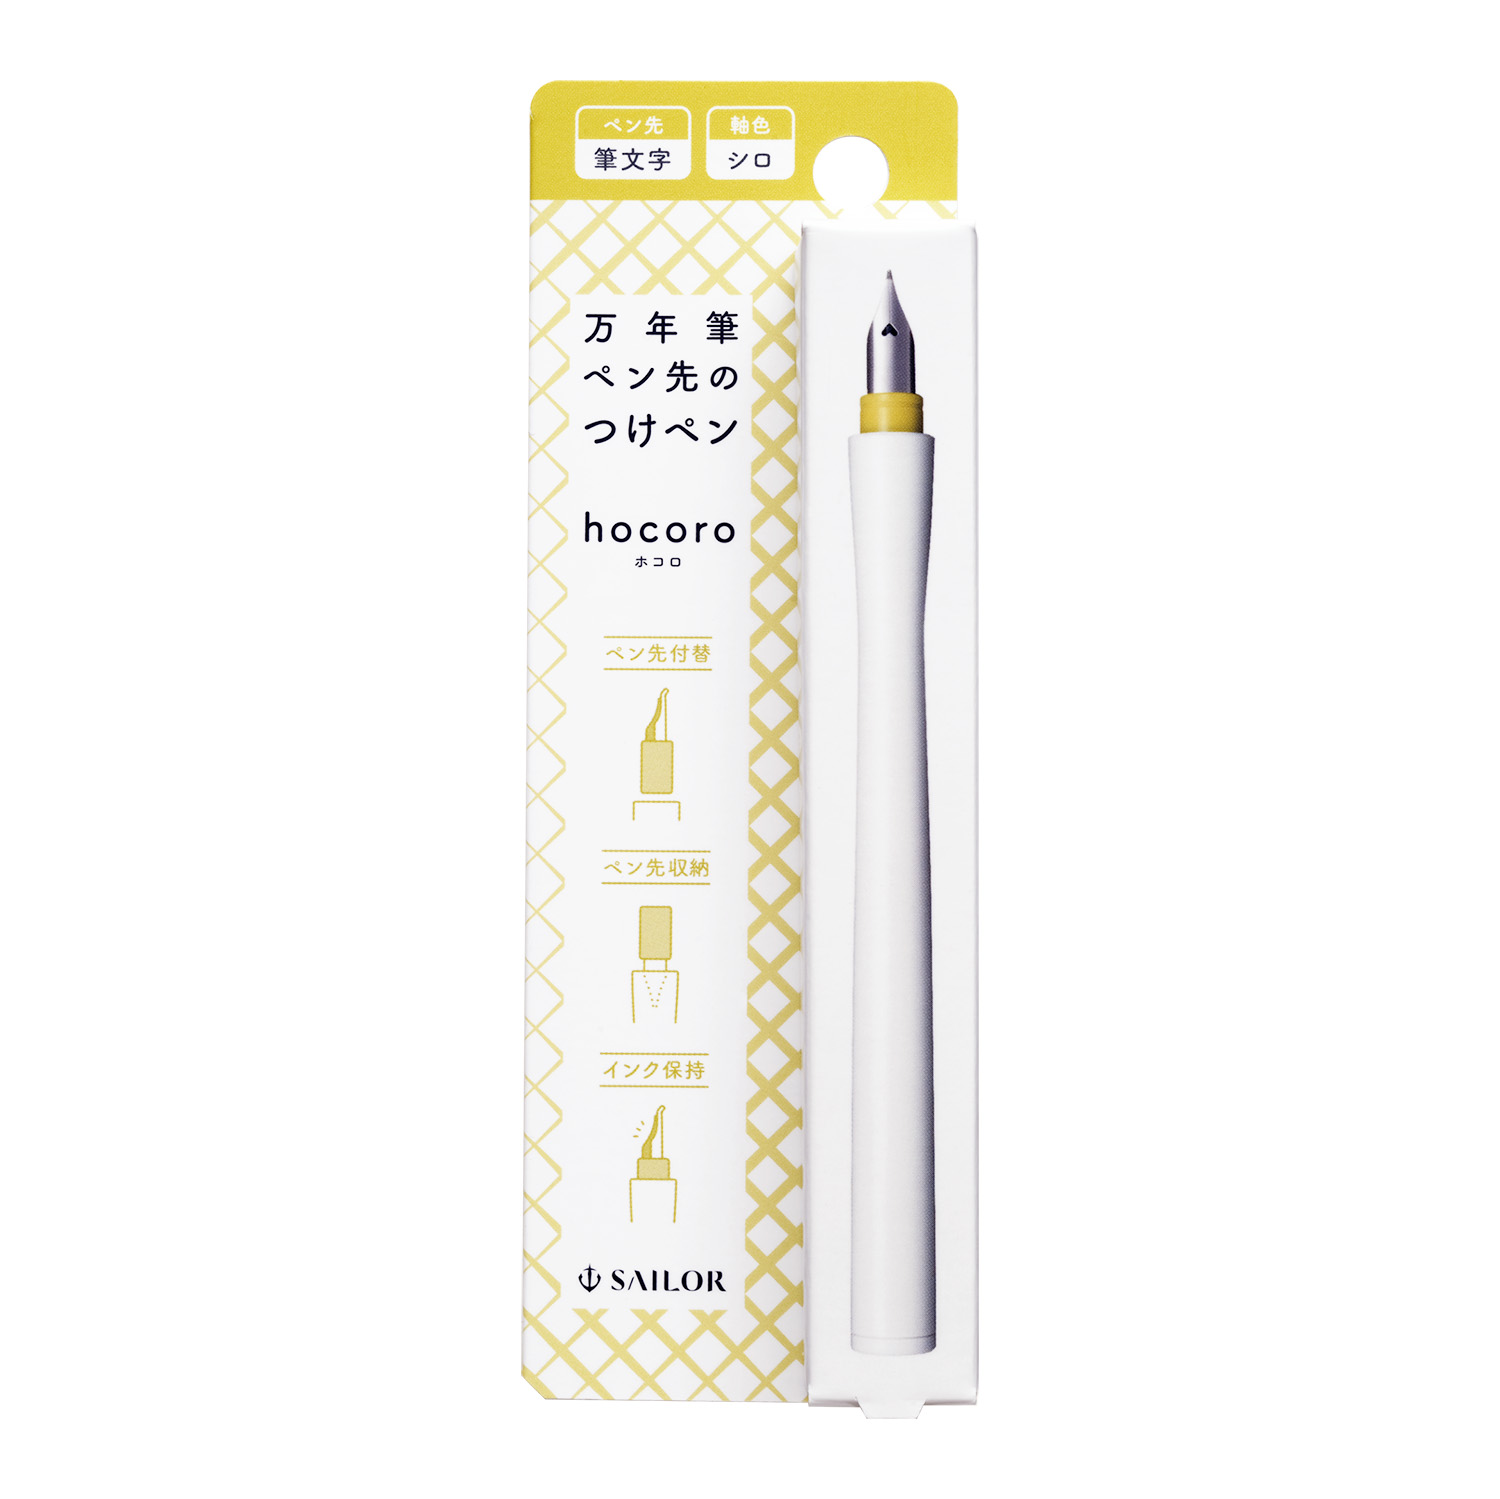 Sailor Hocoro Dip Pen